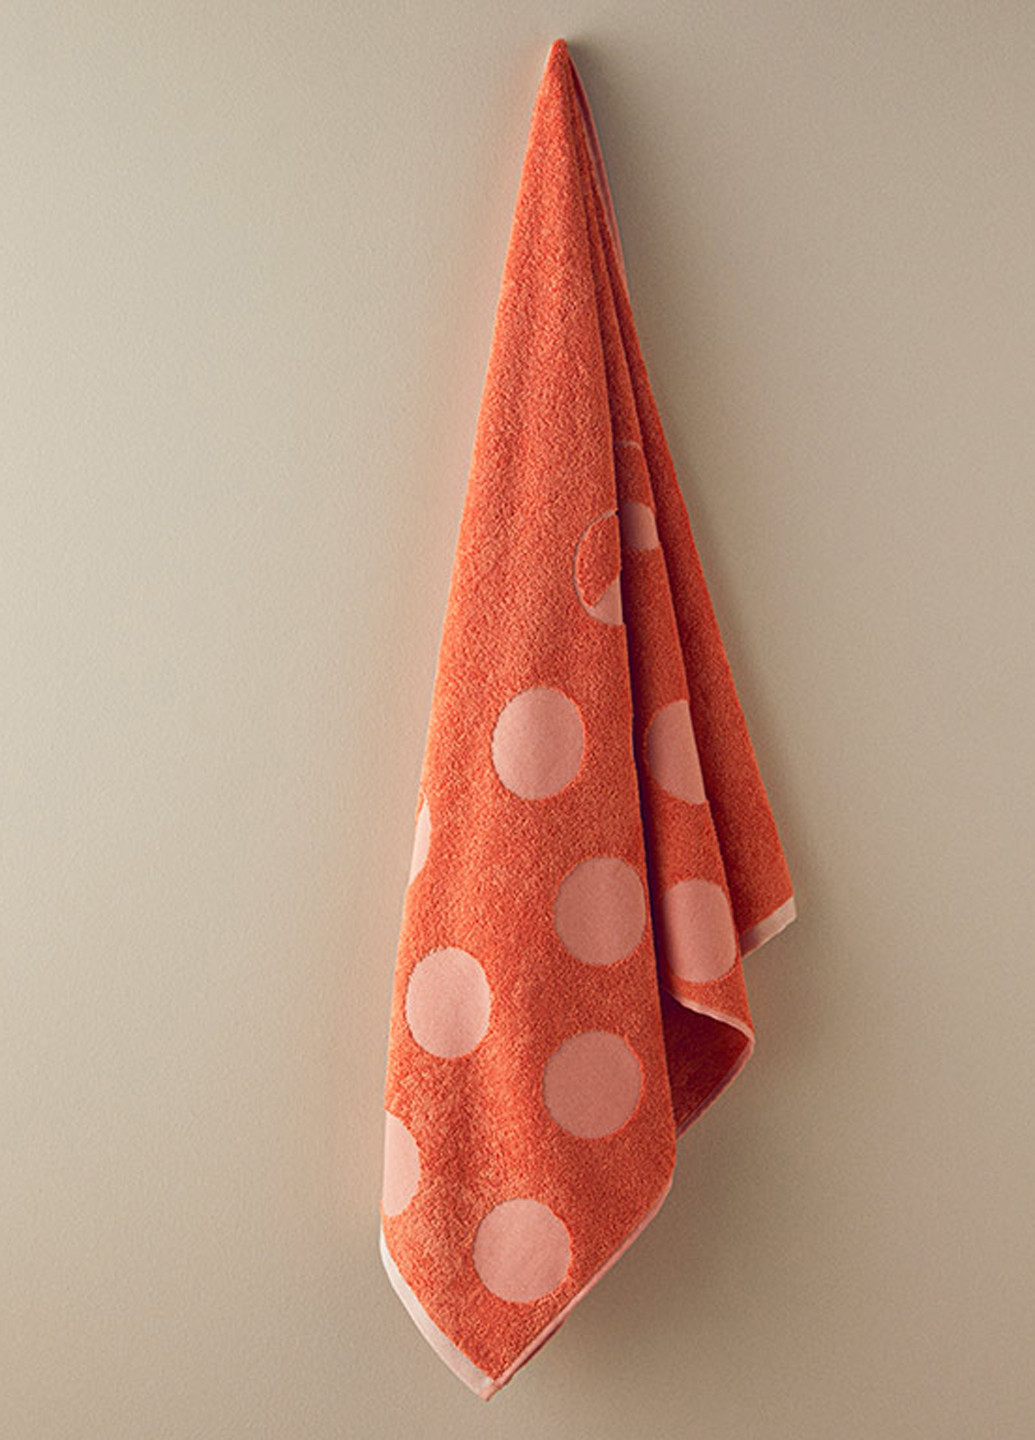 English Home полотенце, 70х140 см рисунок оранжевый производство - Турция